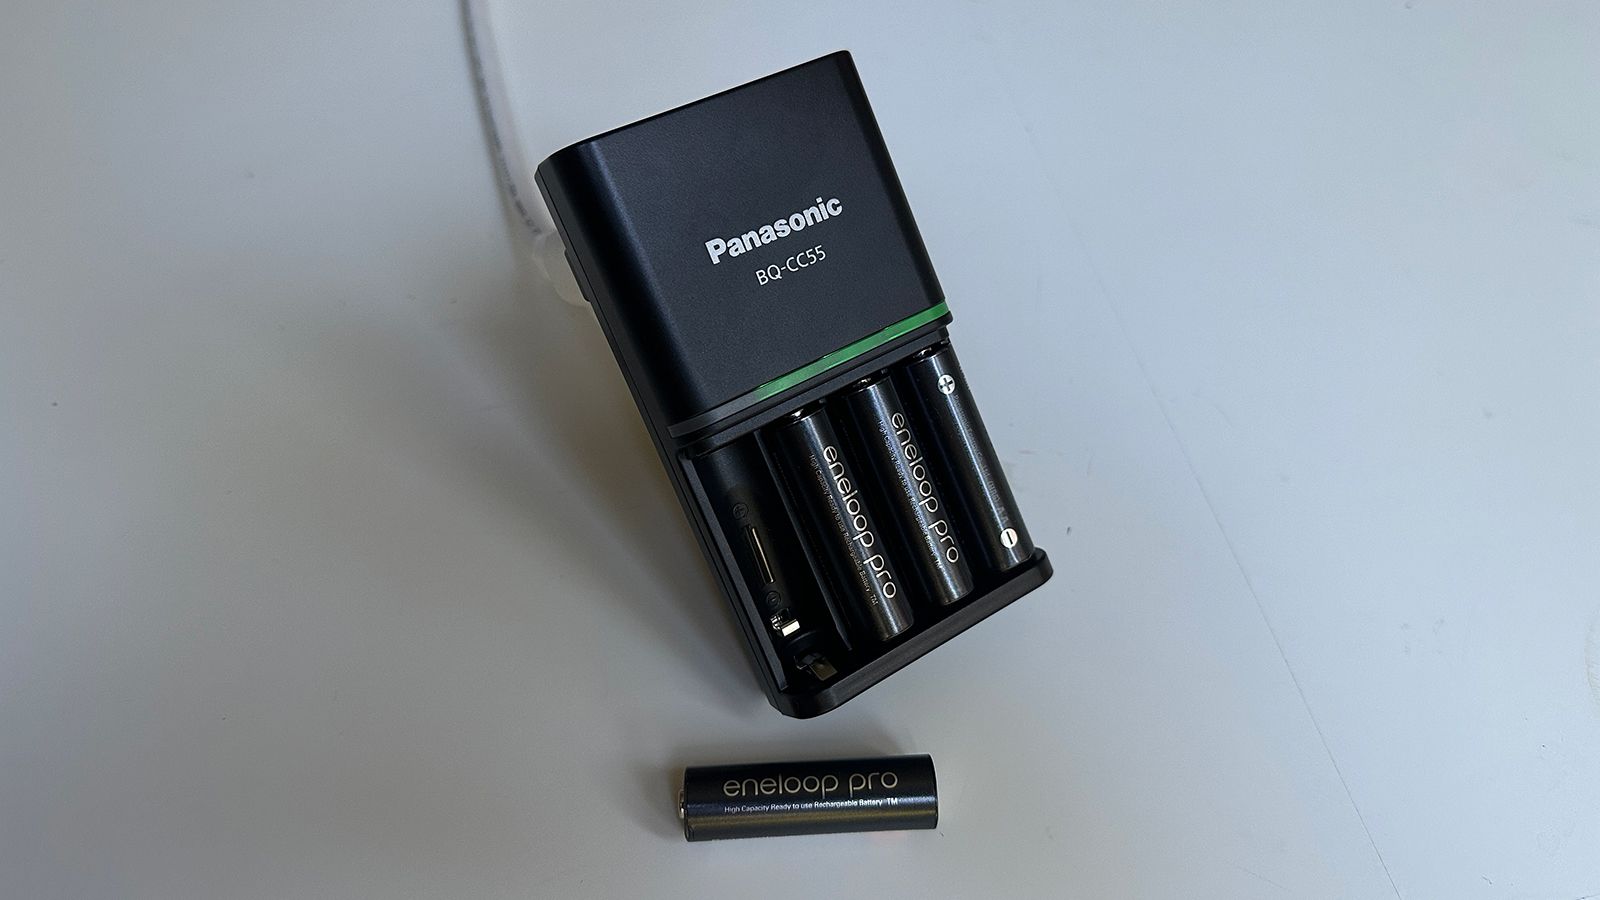 Battery life Xtar Li-ion vs Panasonic Eneloop Pro vs Energizer Max 